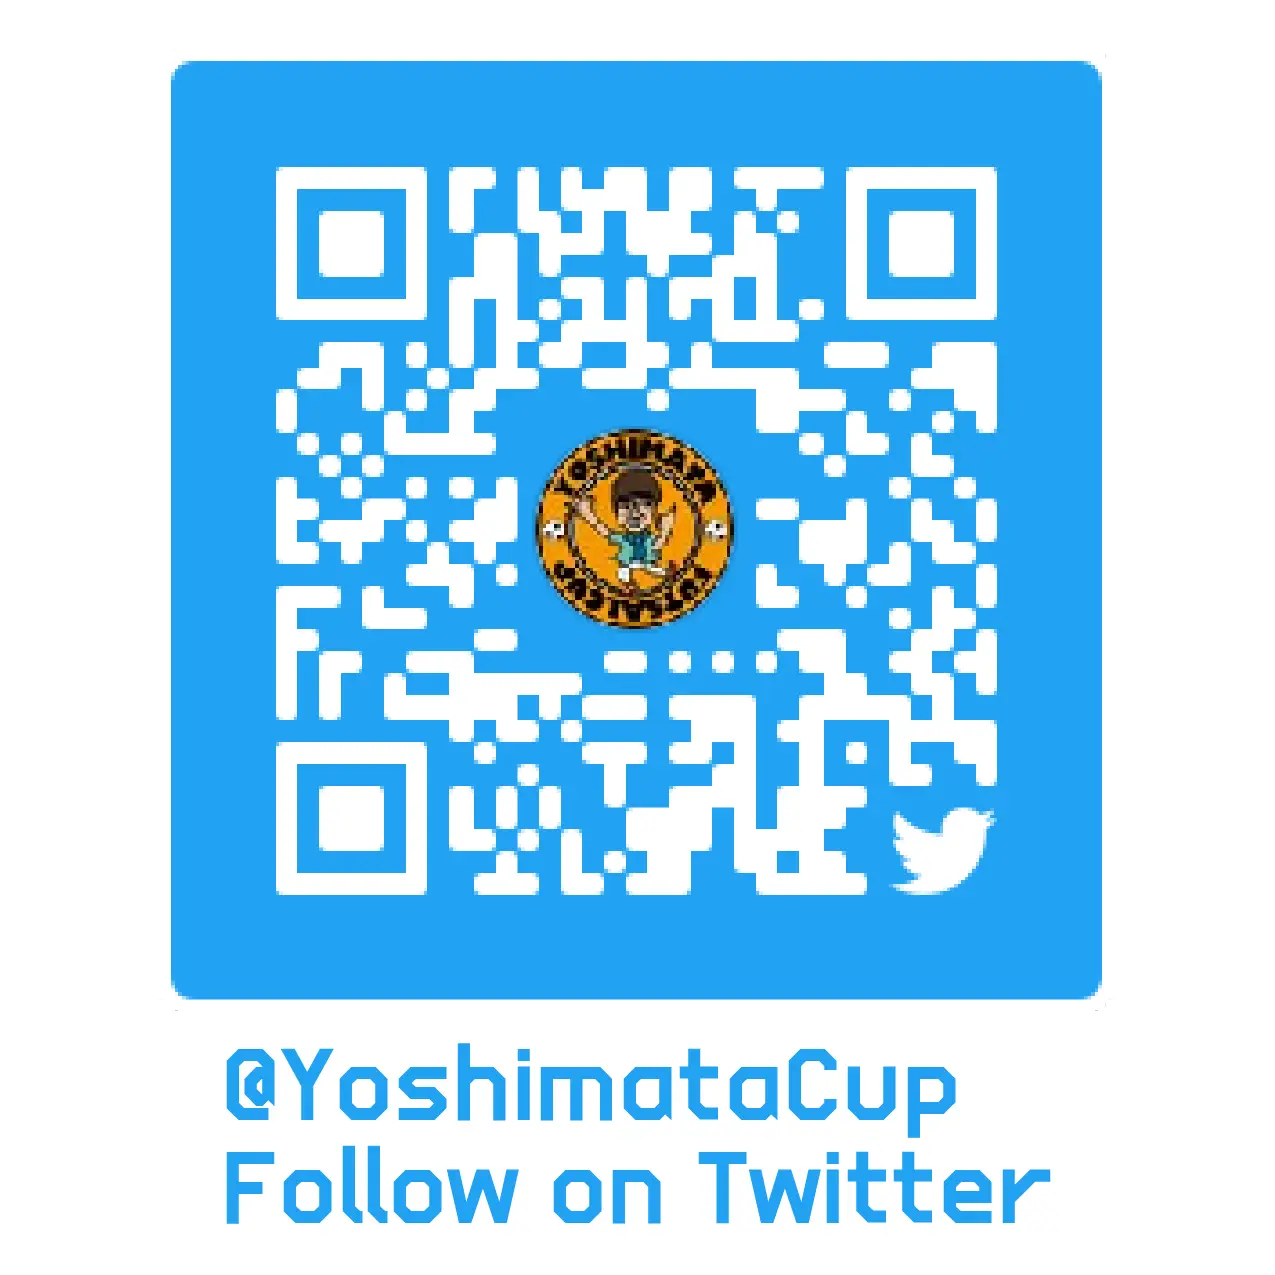 Follow @YoshimataCup on Twitter